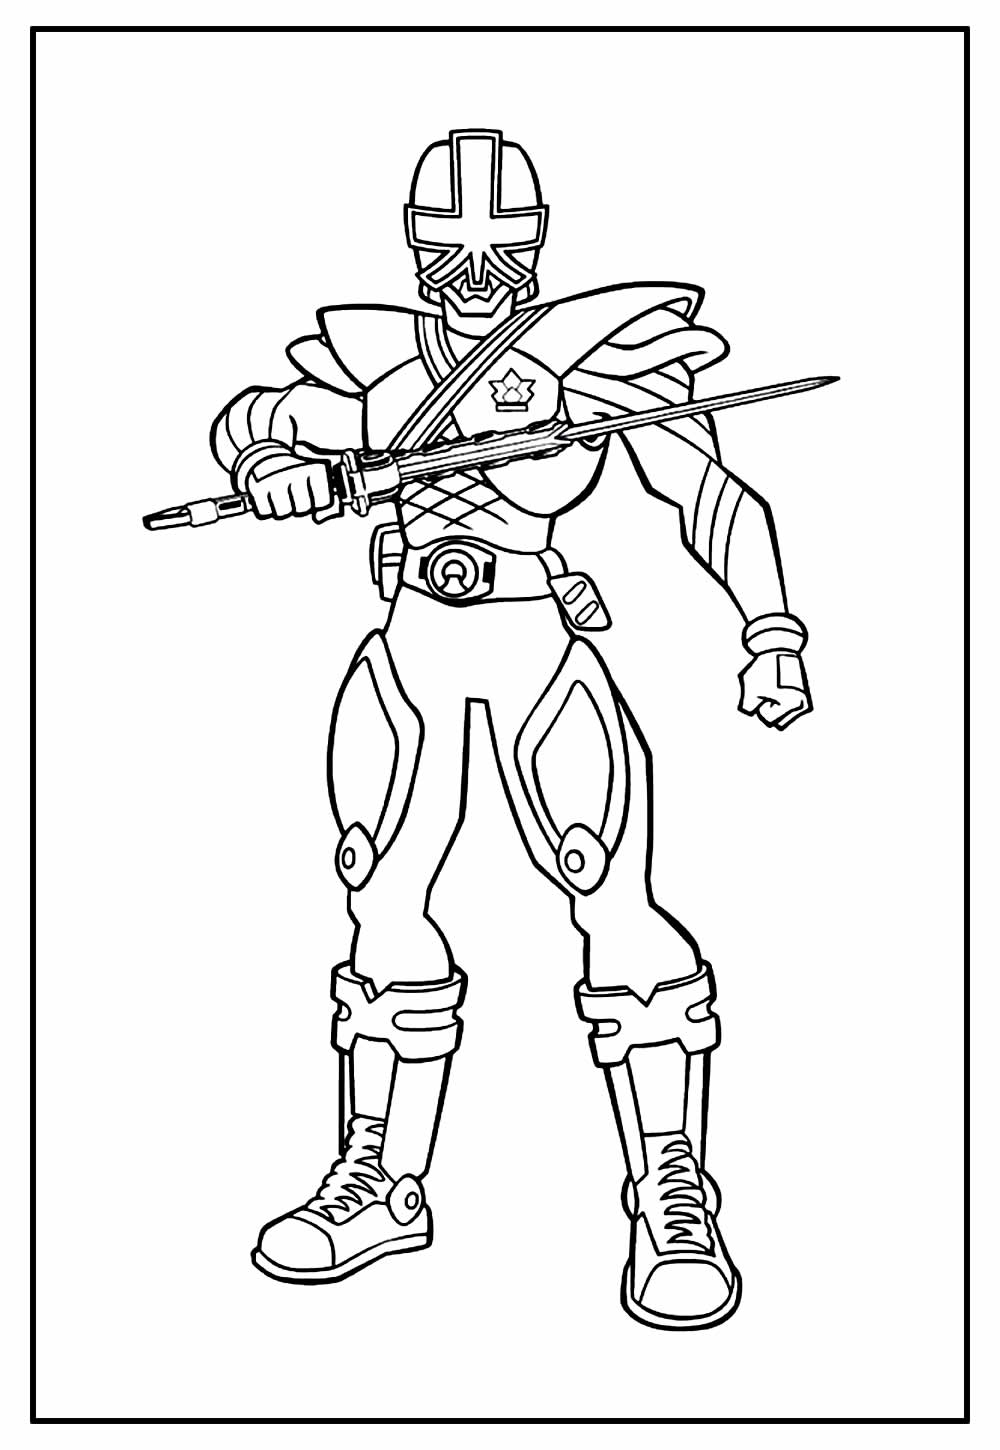 Desenho de Power Rangers para colorir